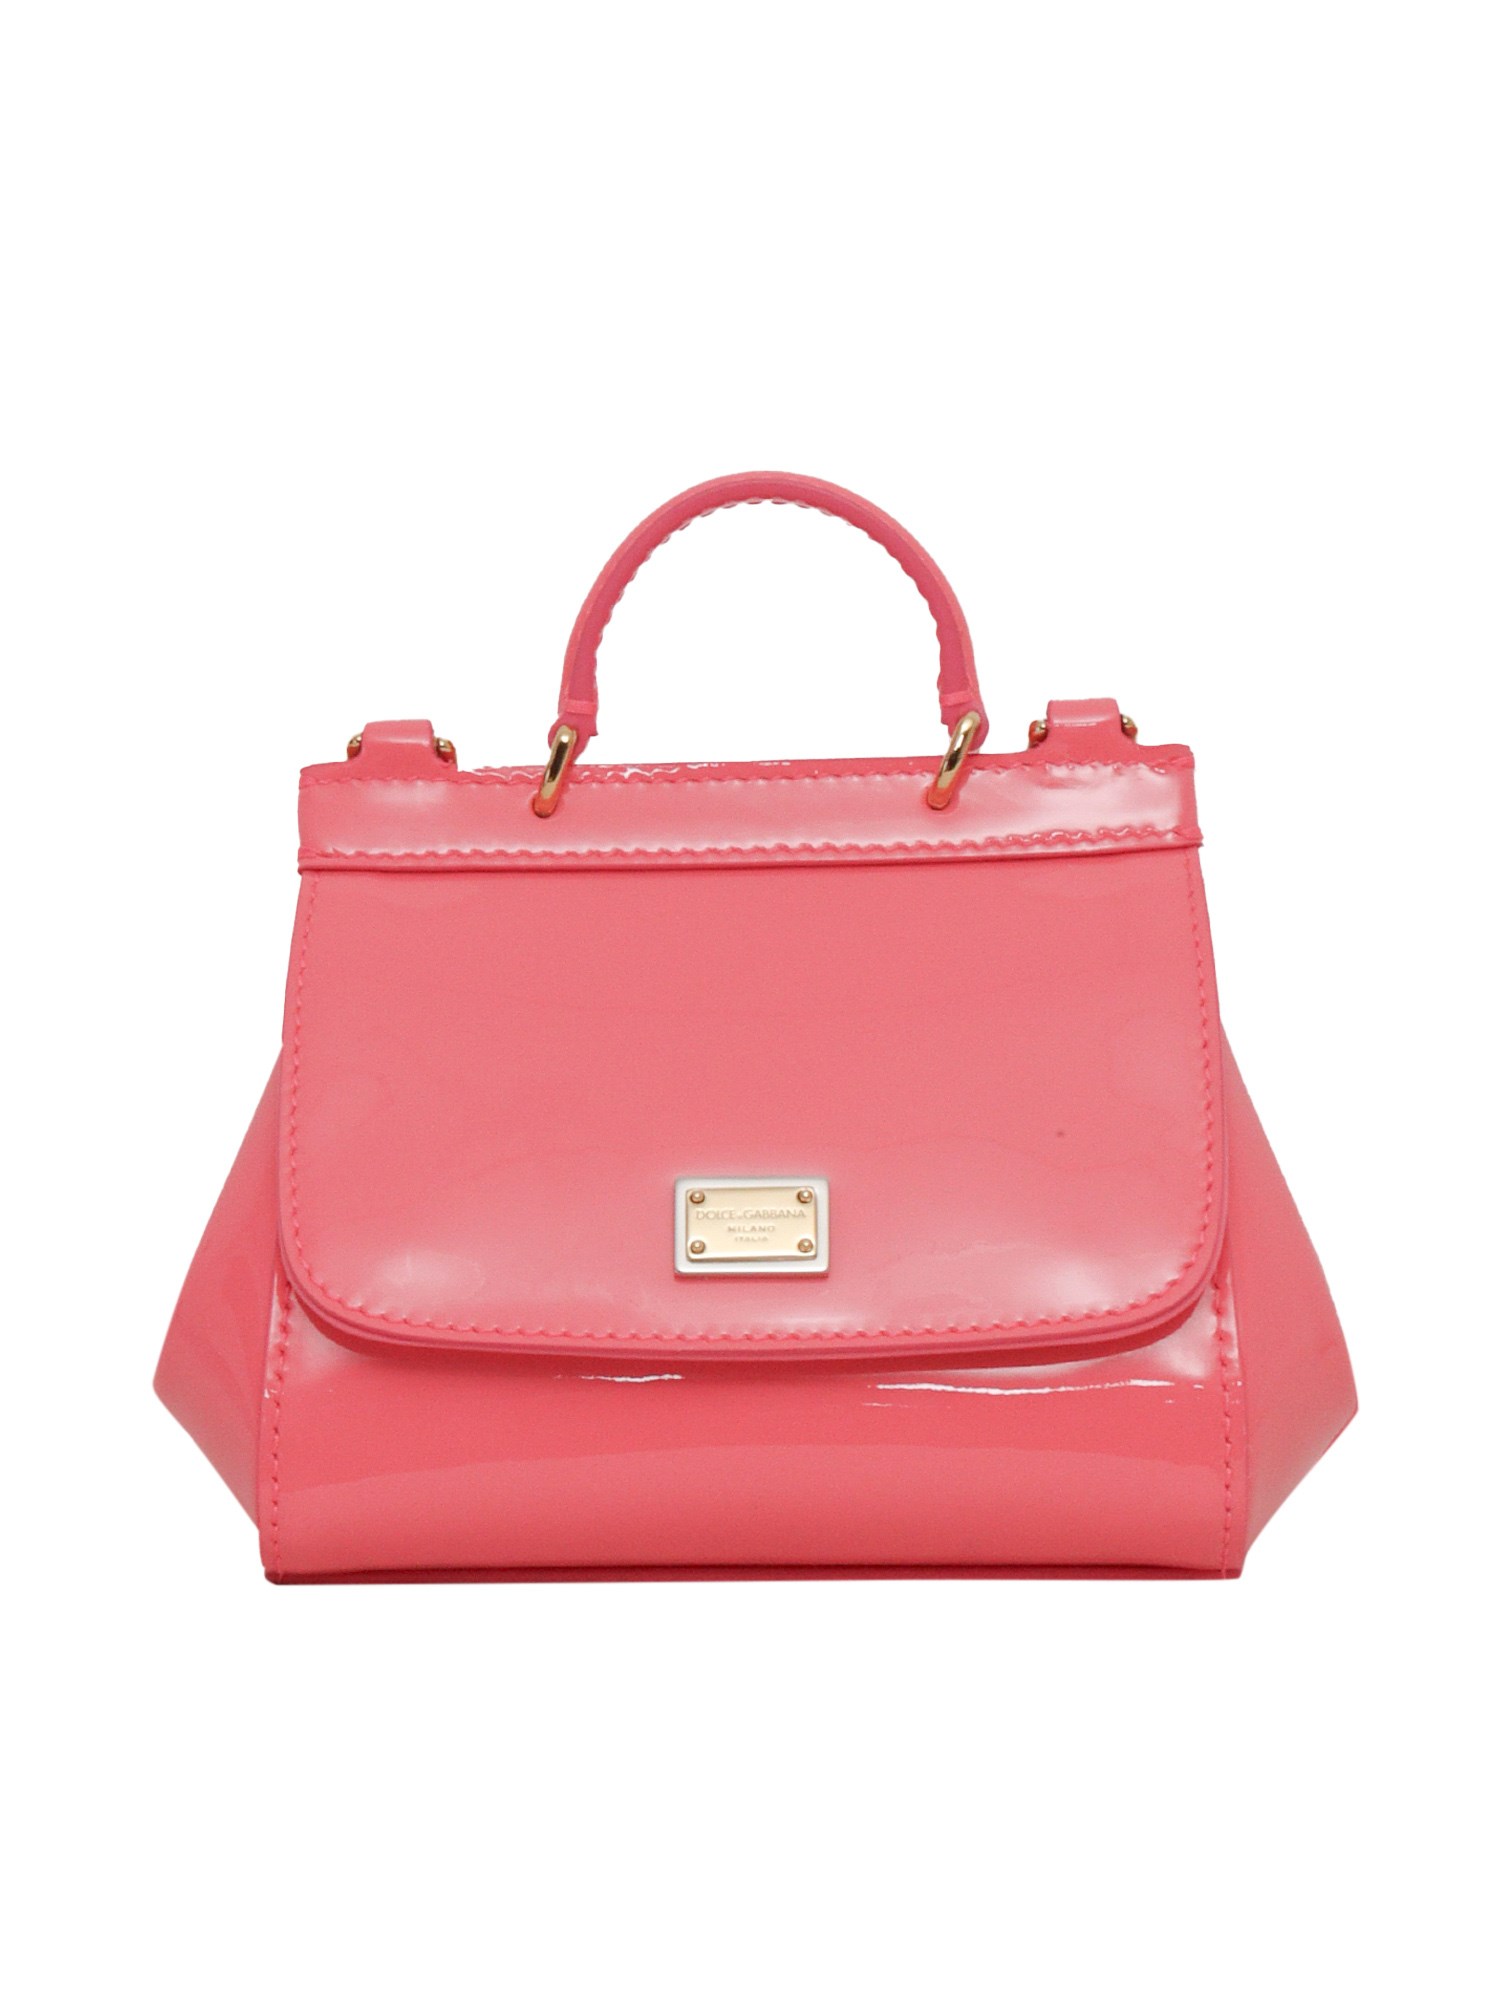 Dolce & Gabbana Junior Pink D&g Leather Bag